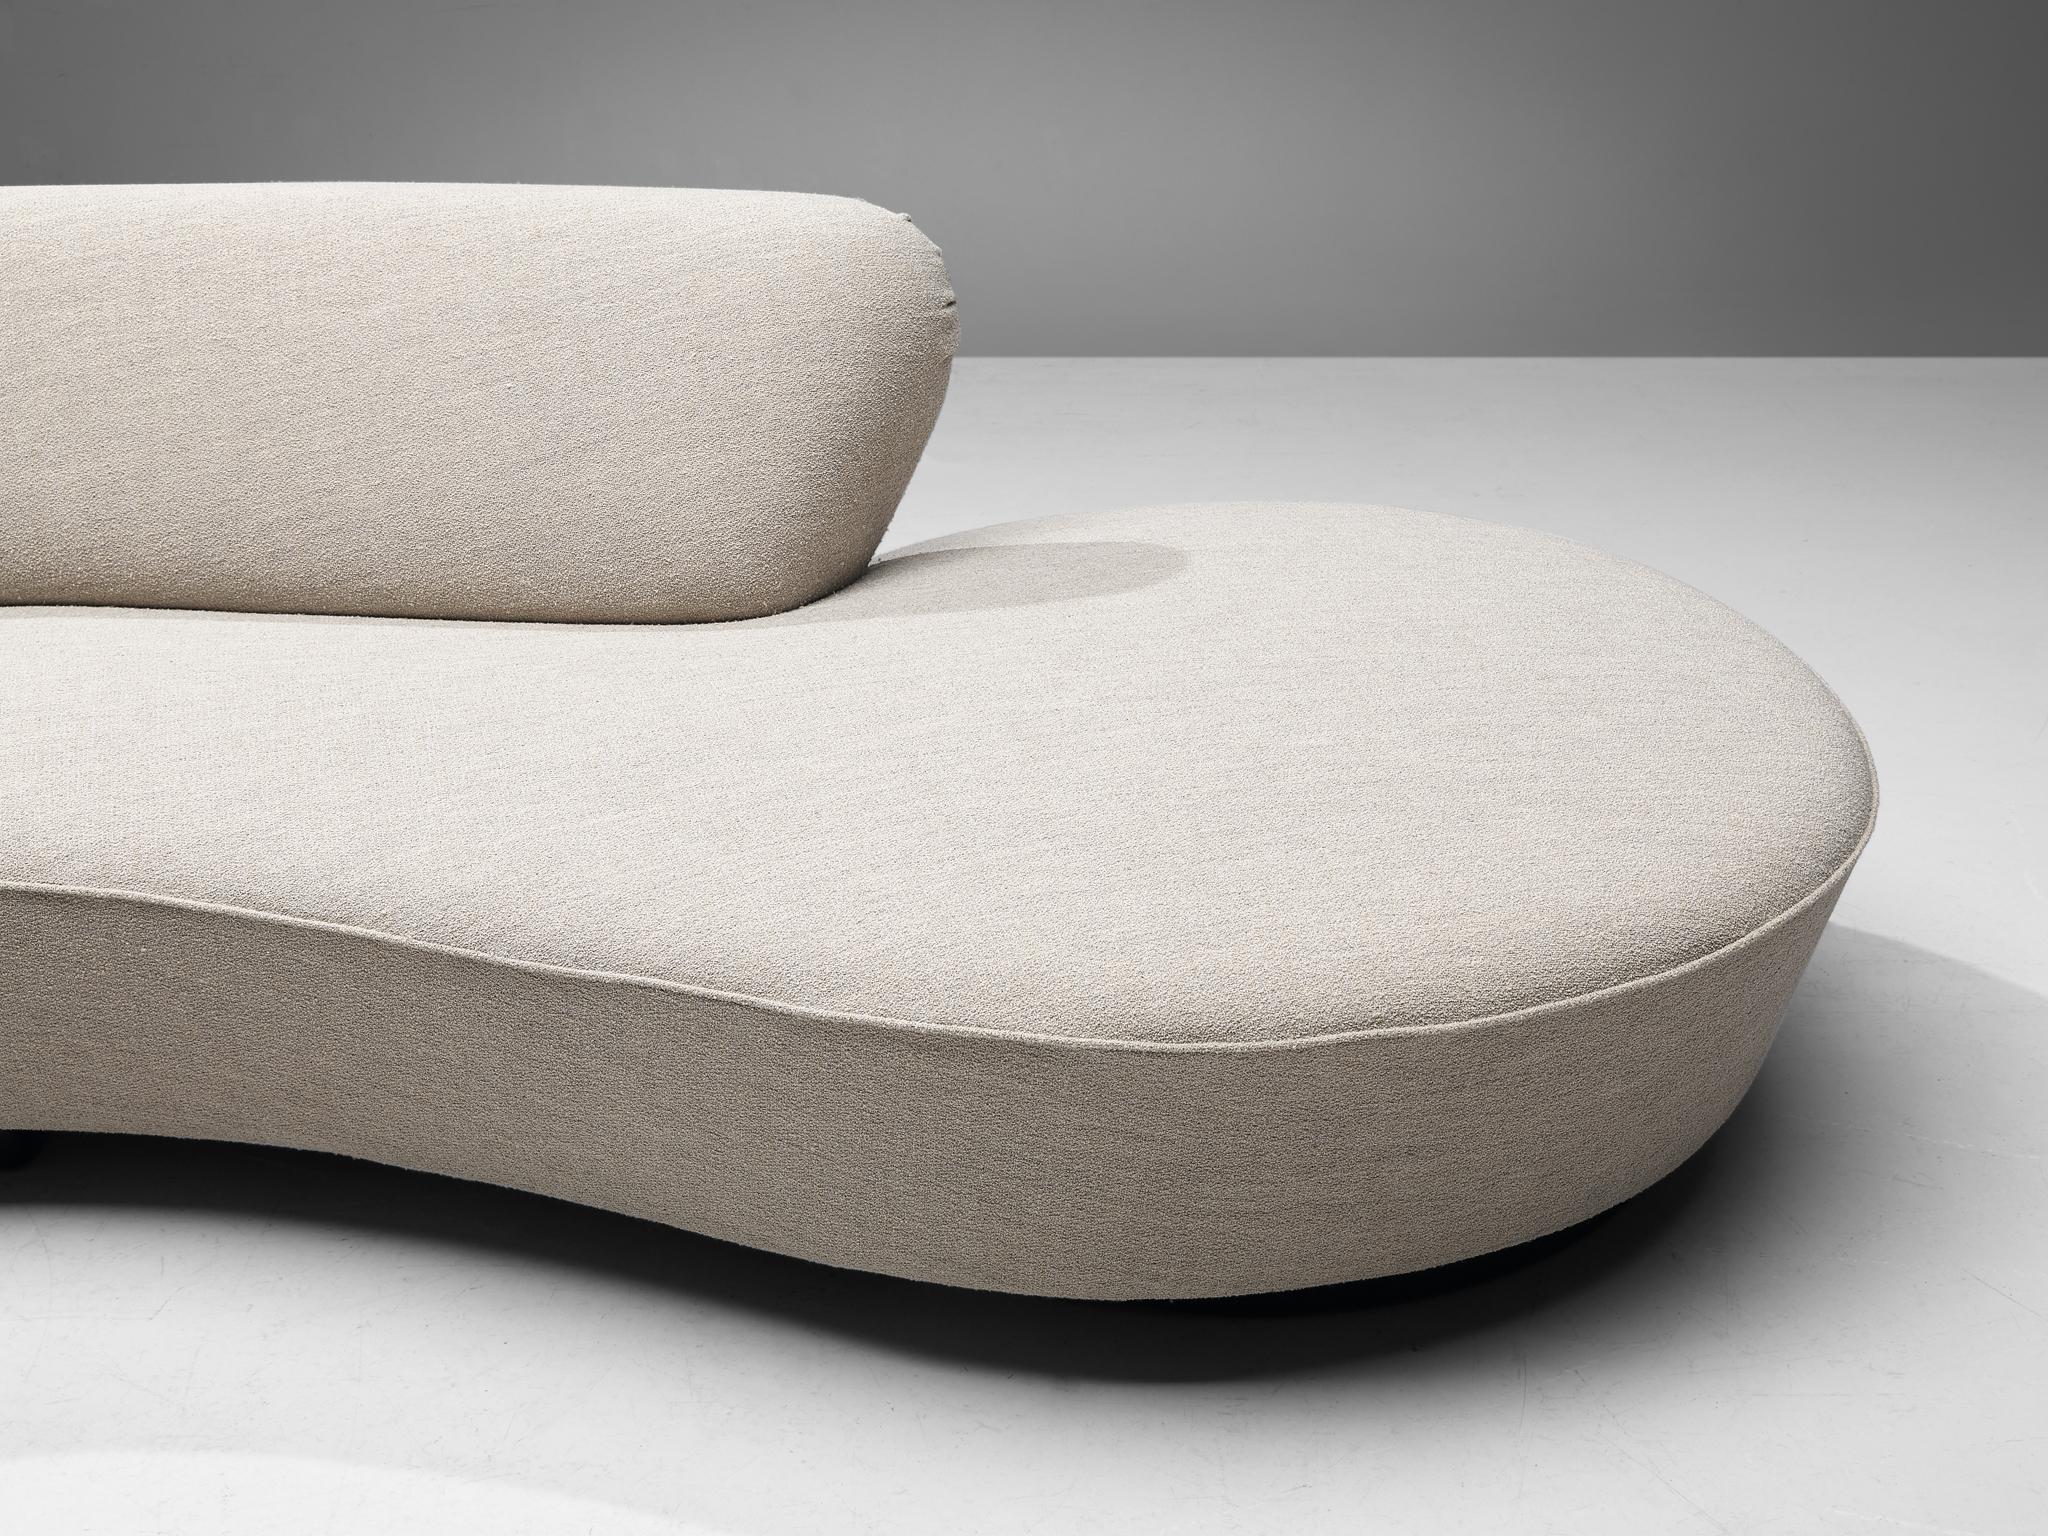 Fabric Iconic Vladimir Kagan ‘Serpentine’ Sofa in White Upholstery